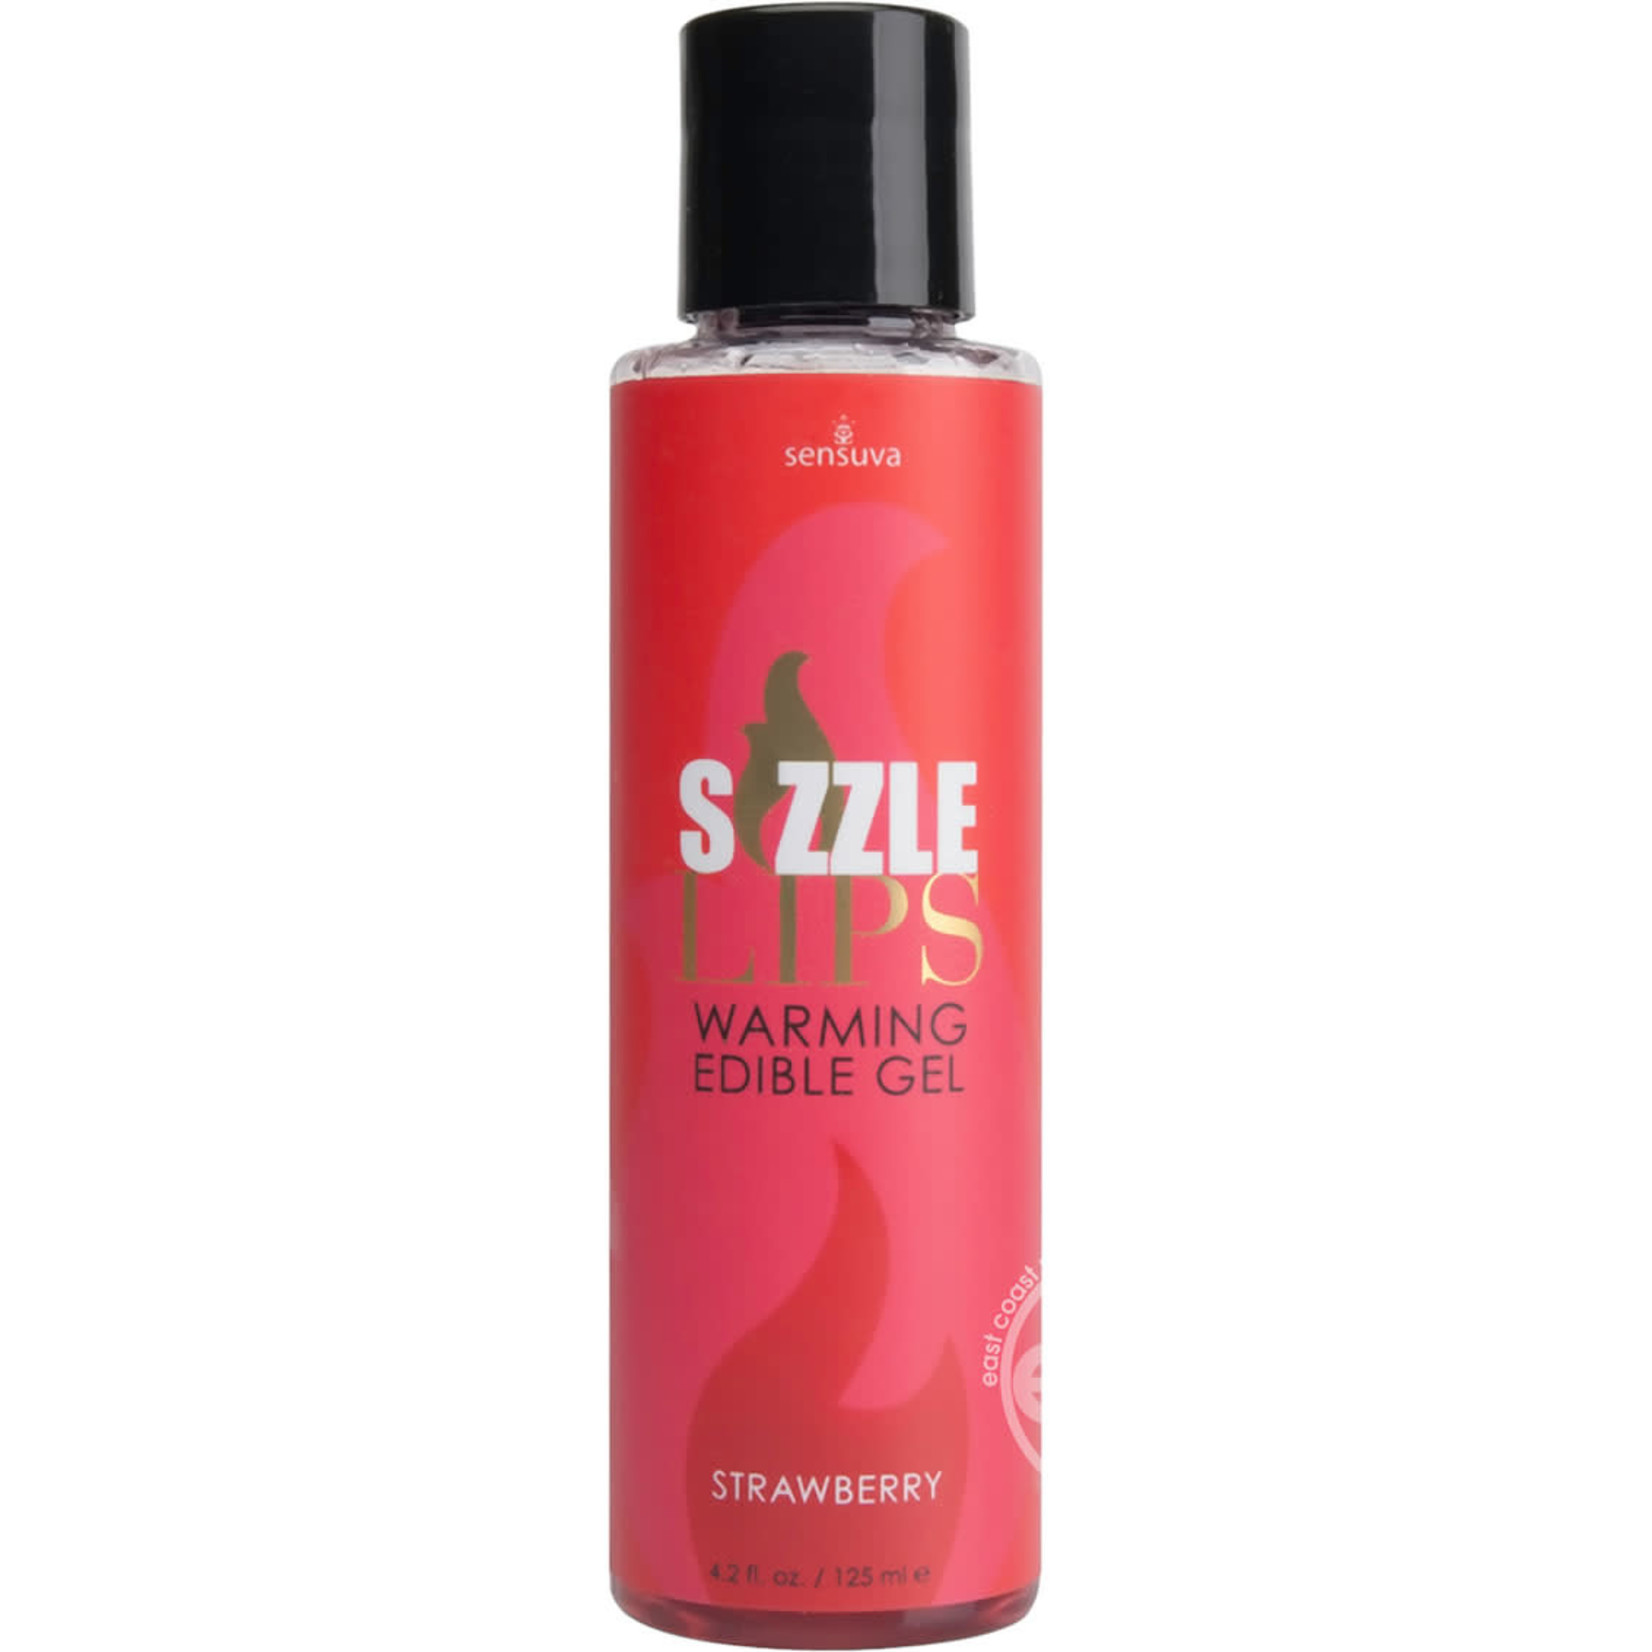 Sizzle Lips Strawberry Warming Gel 4.2 fl.oz. Bottle